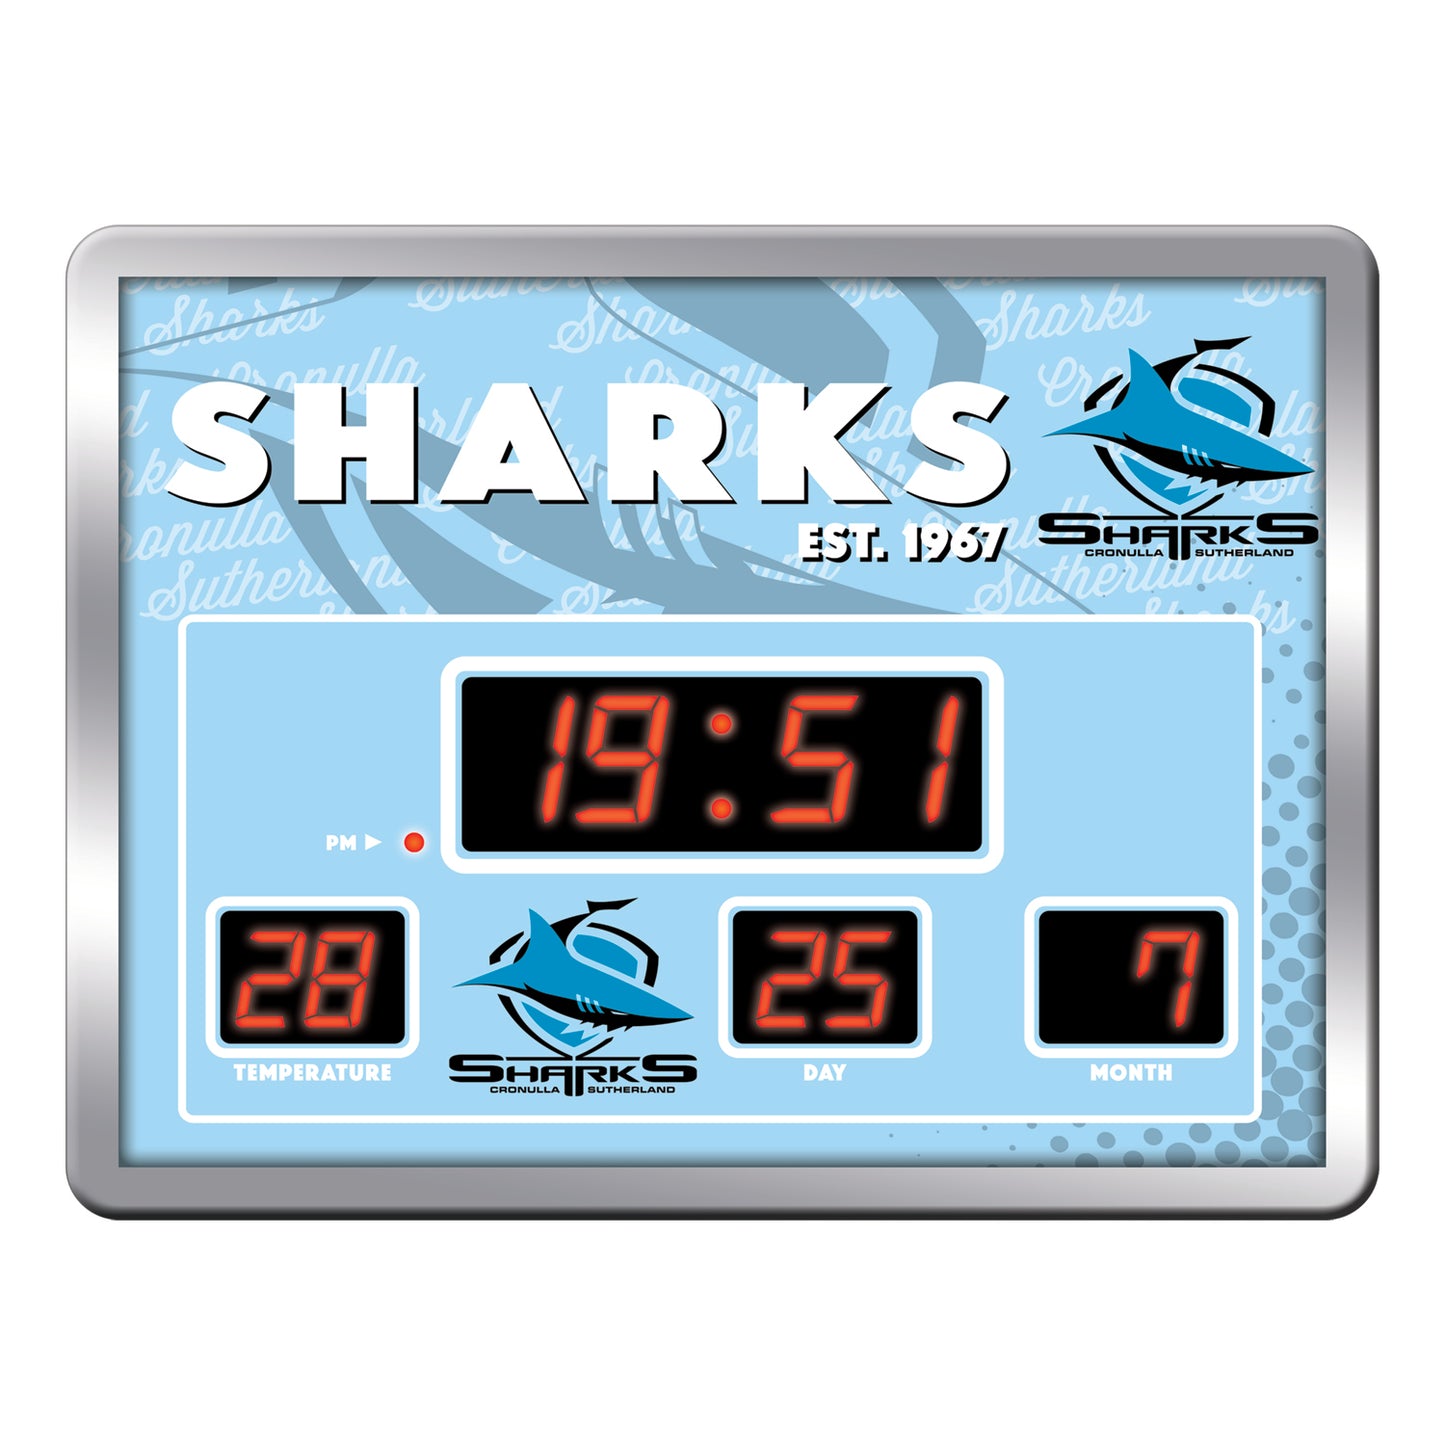 Cronulla-Sutherland Sharks LED Scoreboard Clock